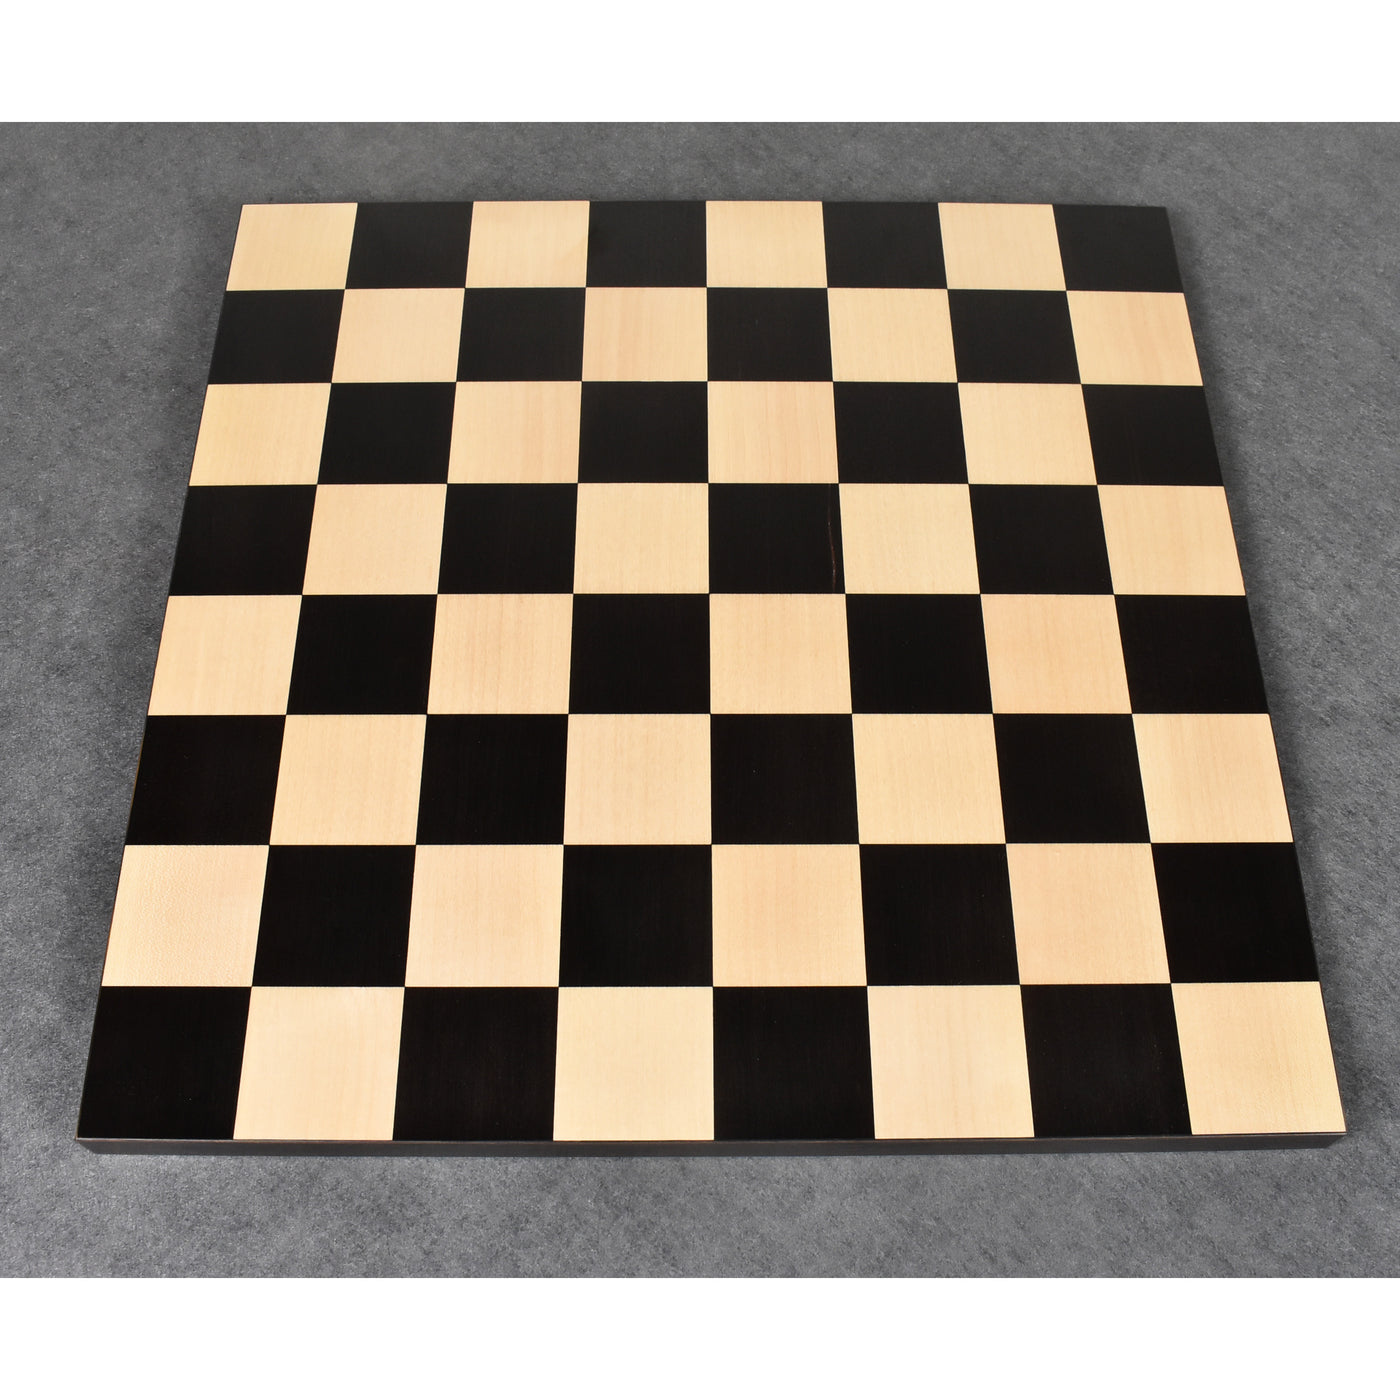 Borderless Chess board